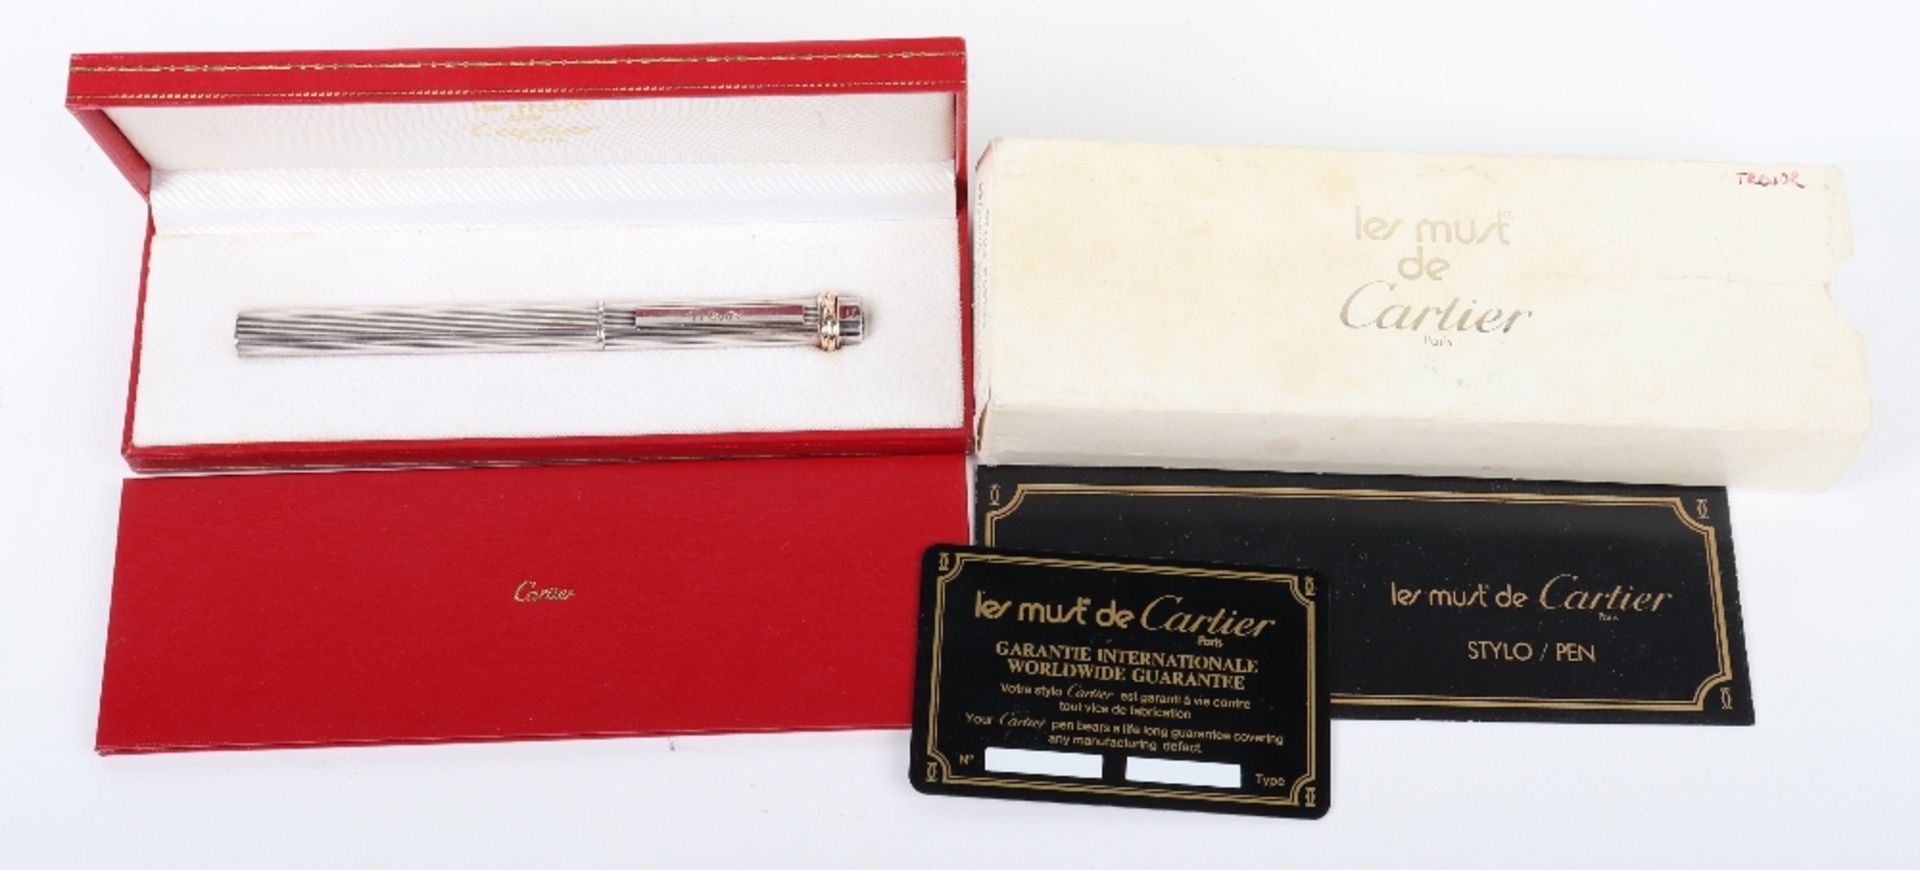 A Cartier, Le Must de Cartier Silver Stylo pen